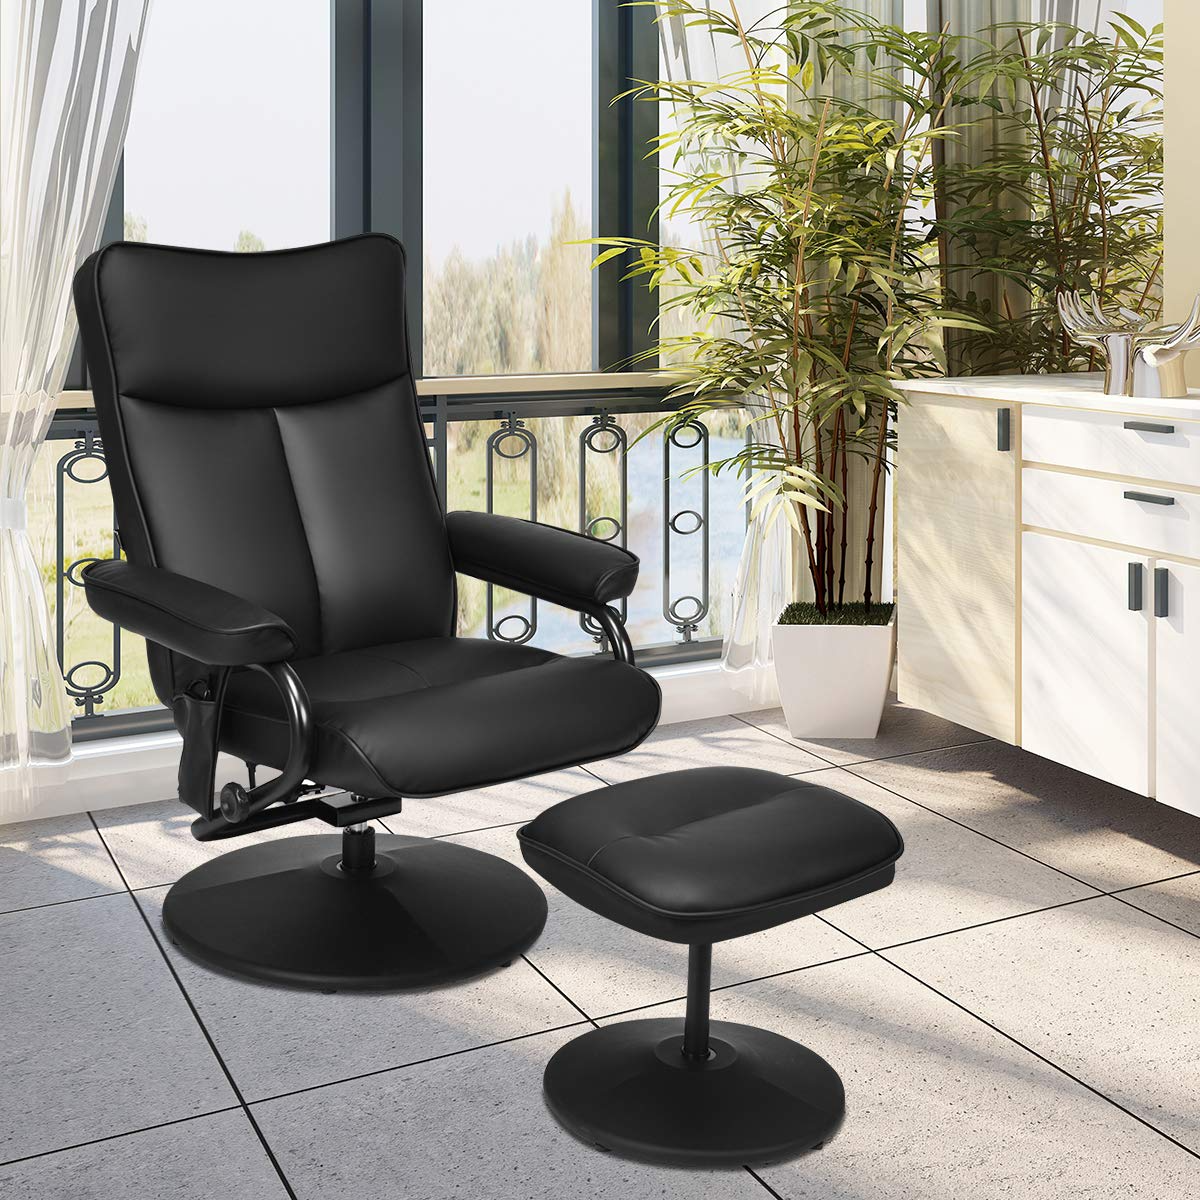 Giantex Overstuffed Padded Seat Chairs (Black)